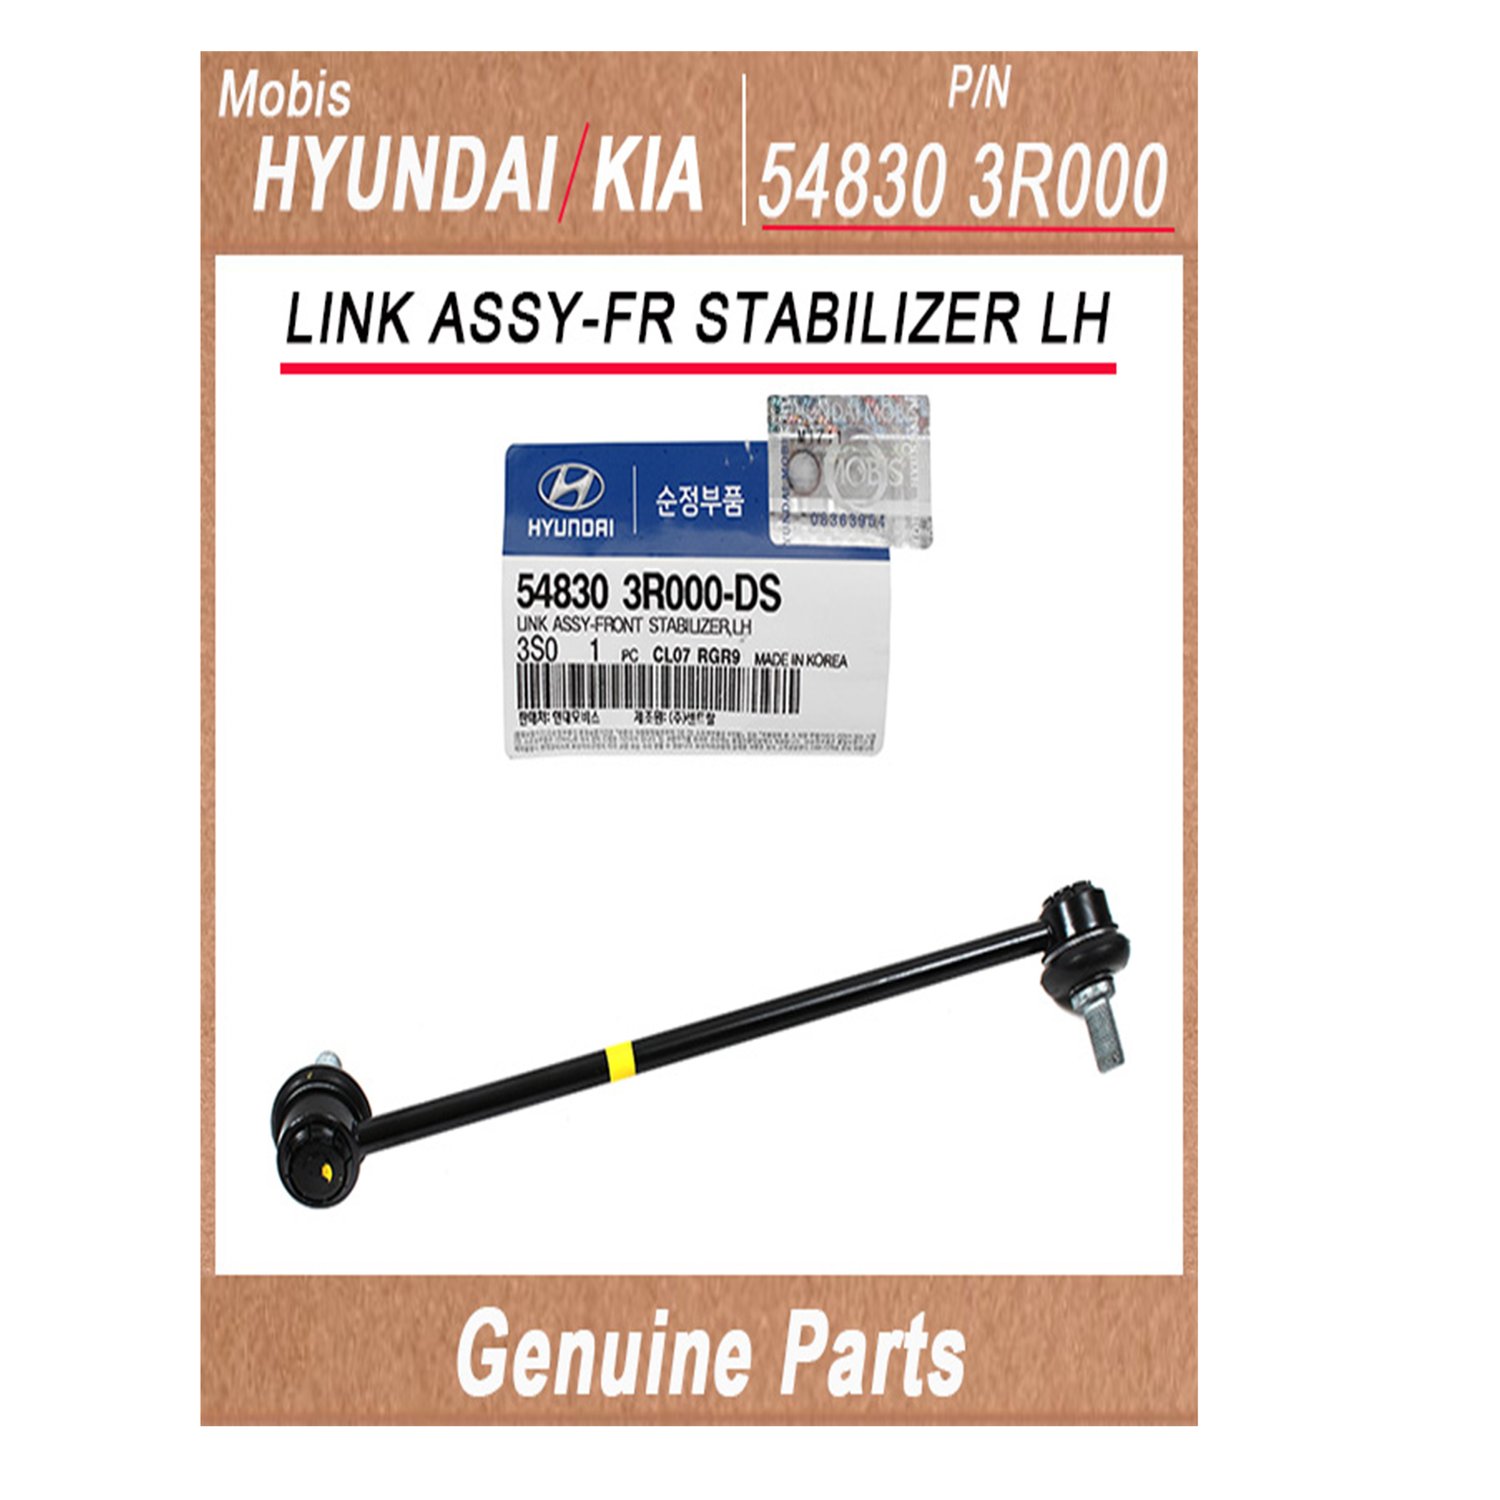 548303R000 _ LINK ASSY_FR STABILIZER LH _ Genuine Korean Automotive Spare Parts _ Hyundai Kia _Mobis